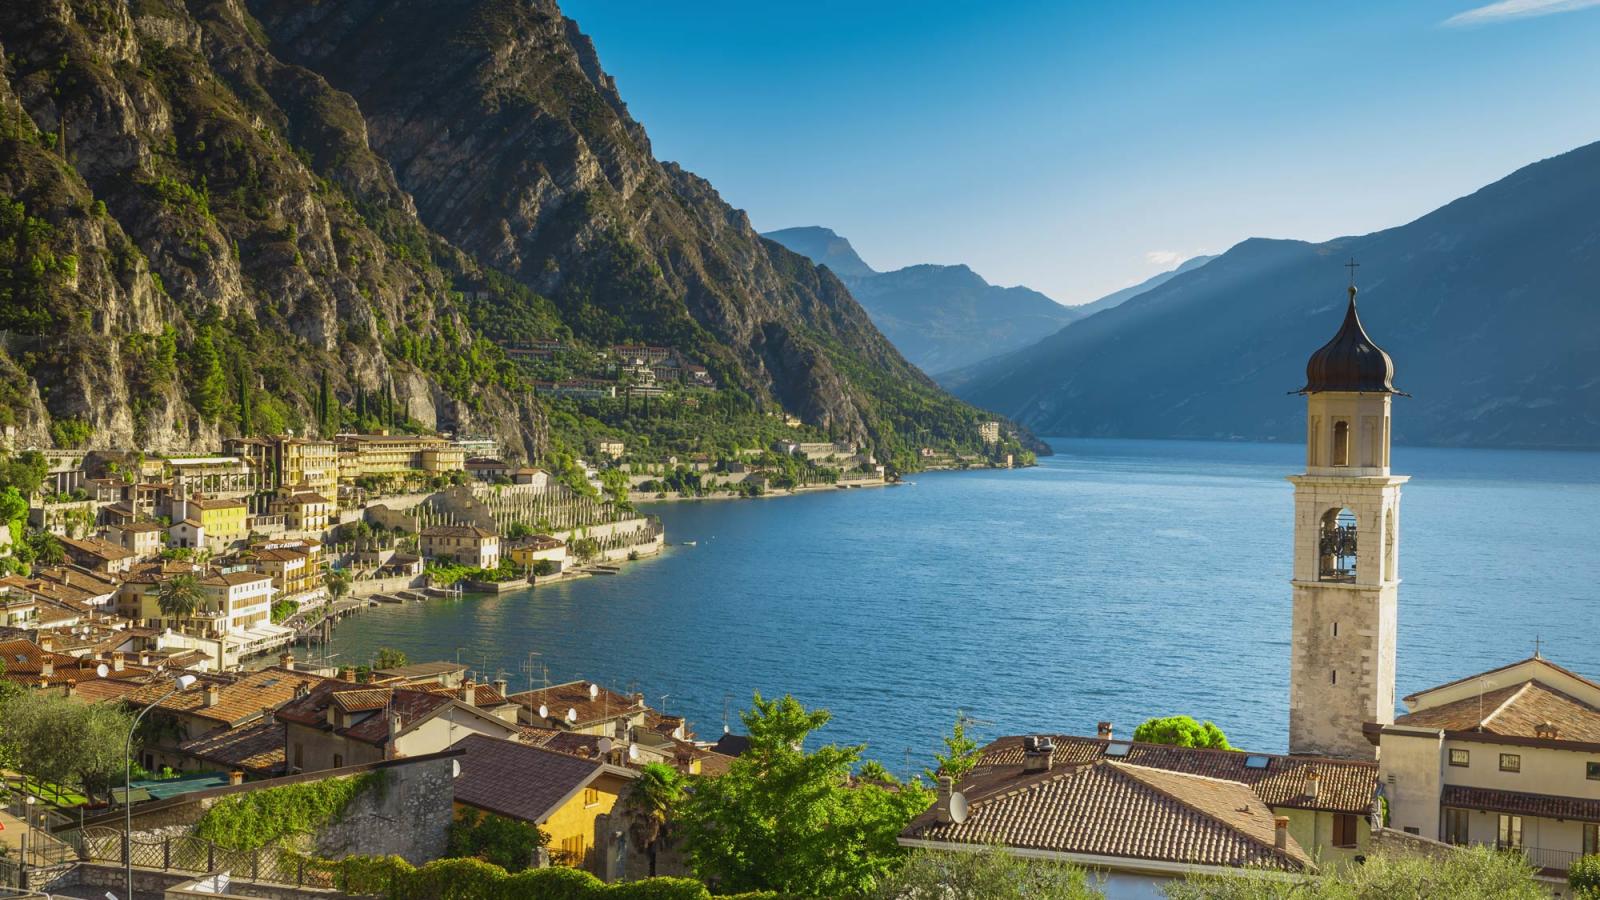 Lake Garda Italia. WORLD OF WANDERLUST